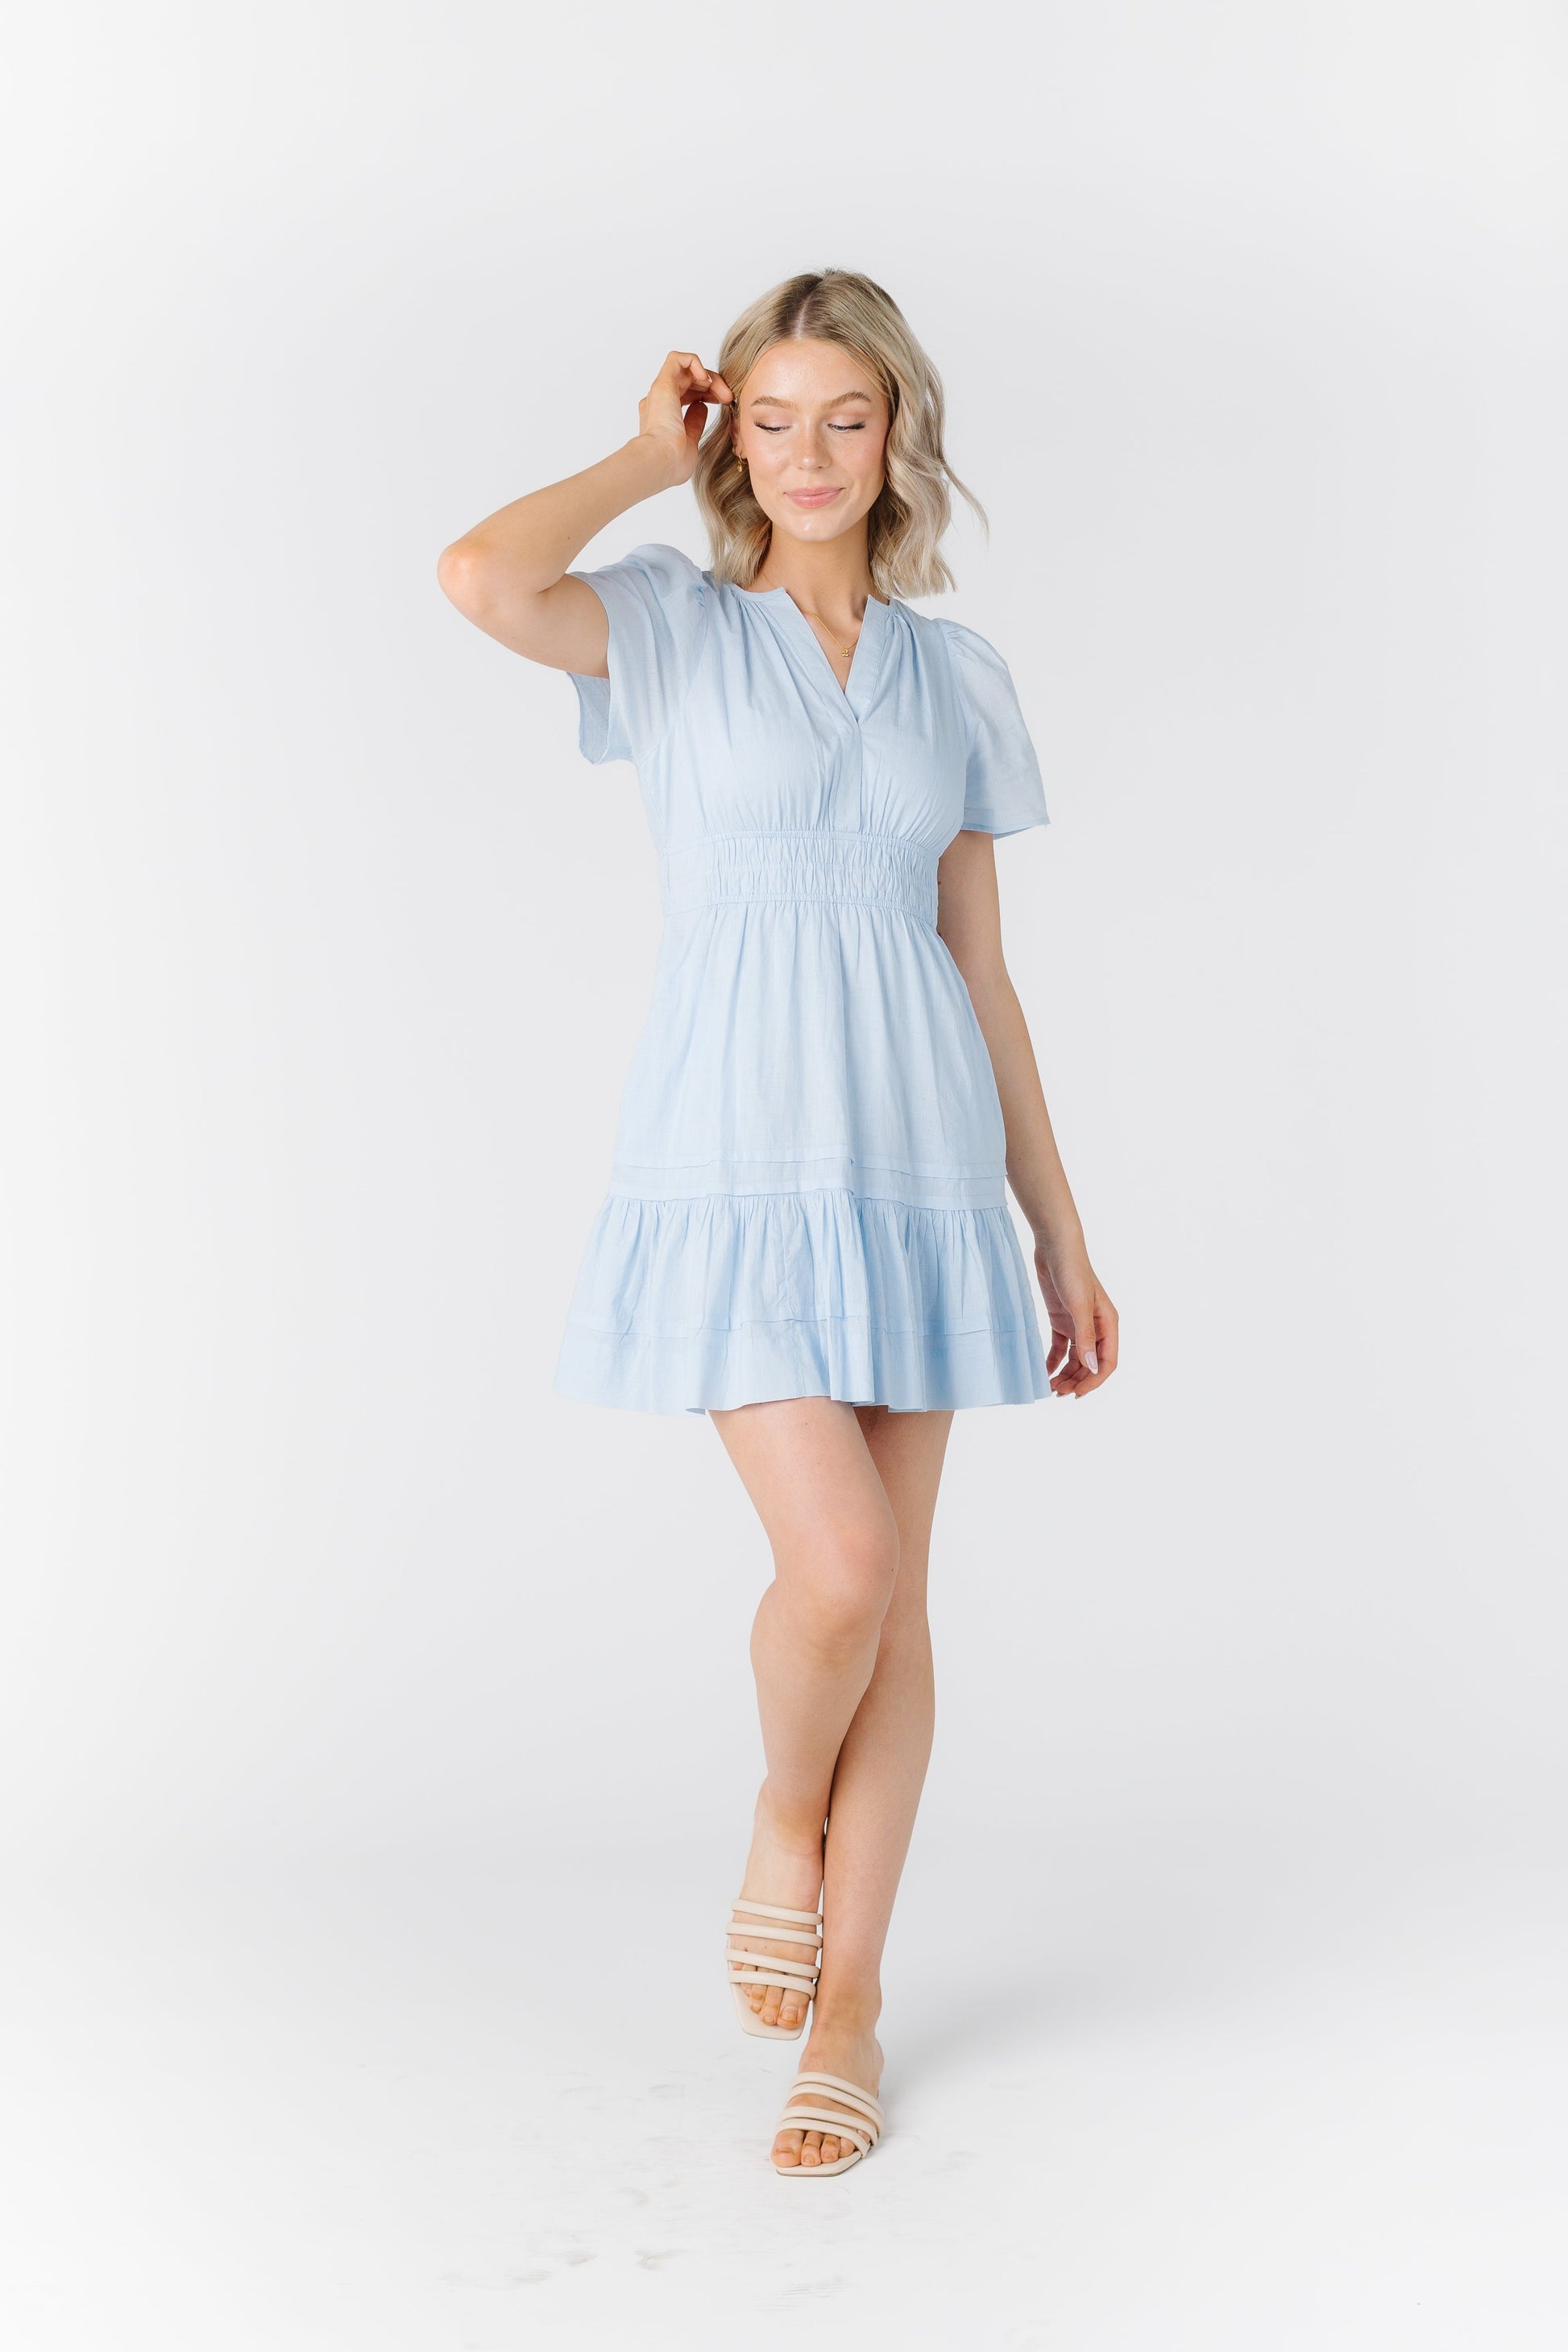 Citrus Shae Dress Mini Dress WOMEN'S DRESS Citrus Lt Blue L 